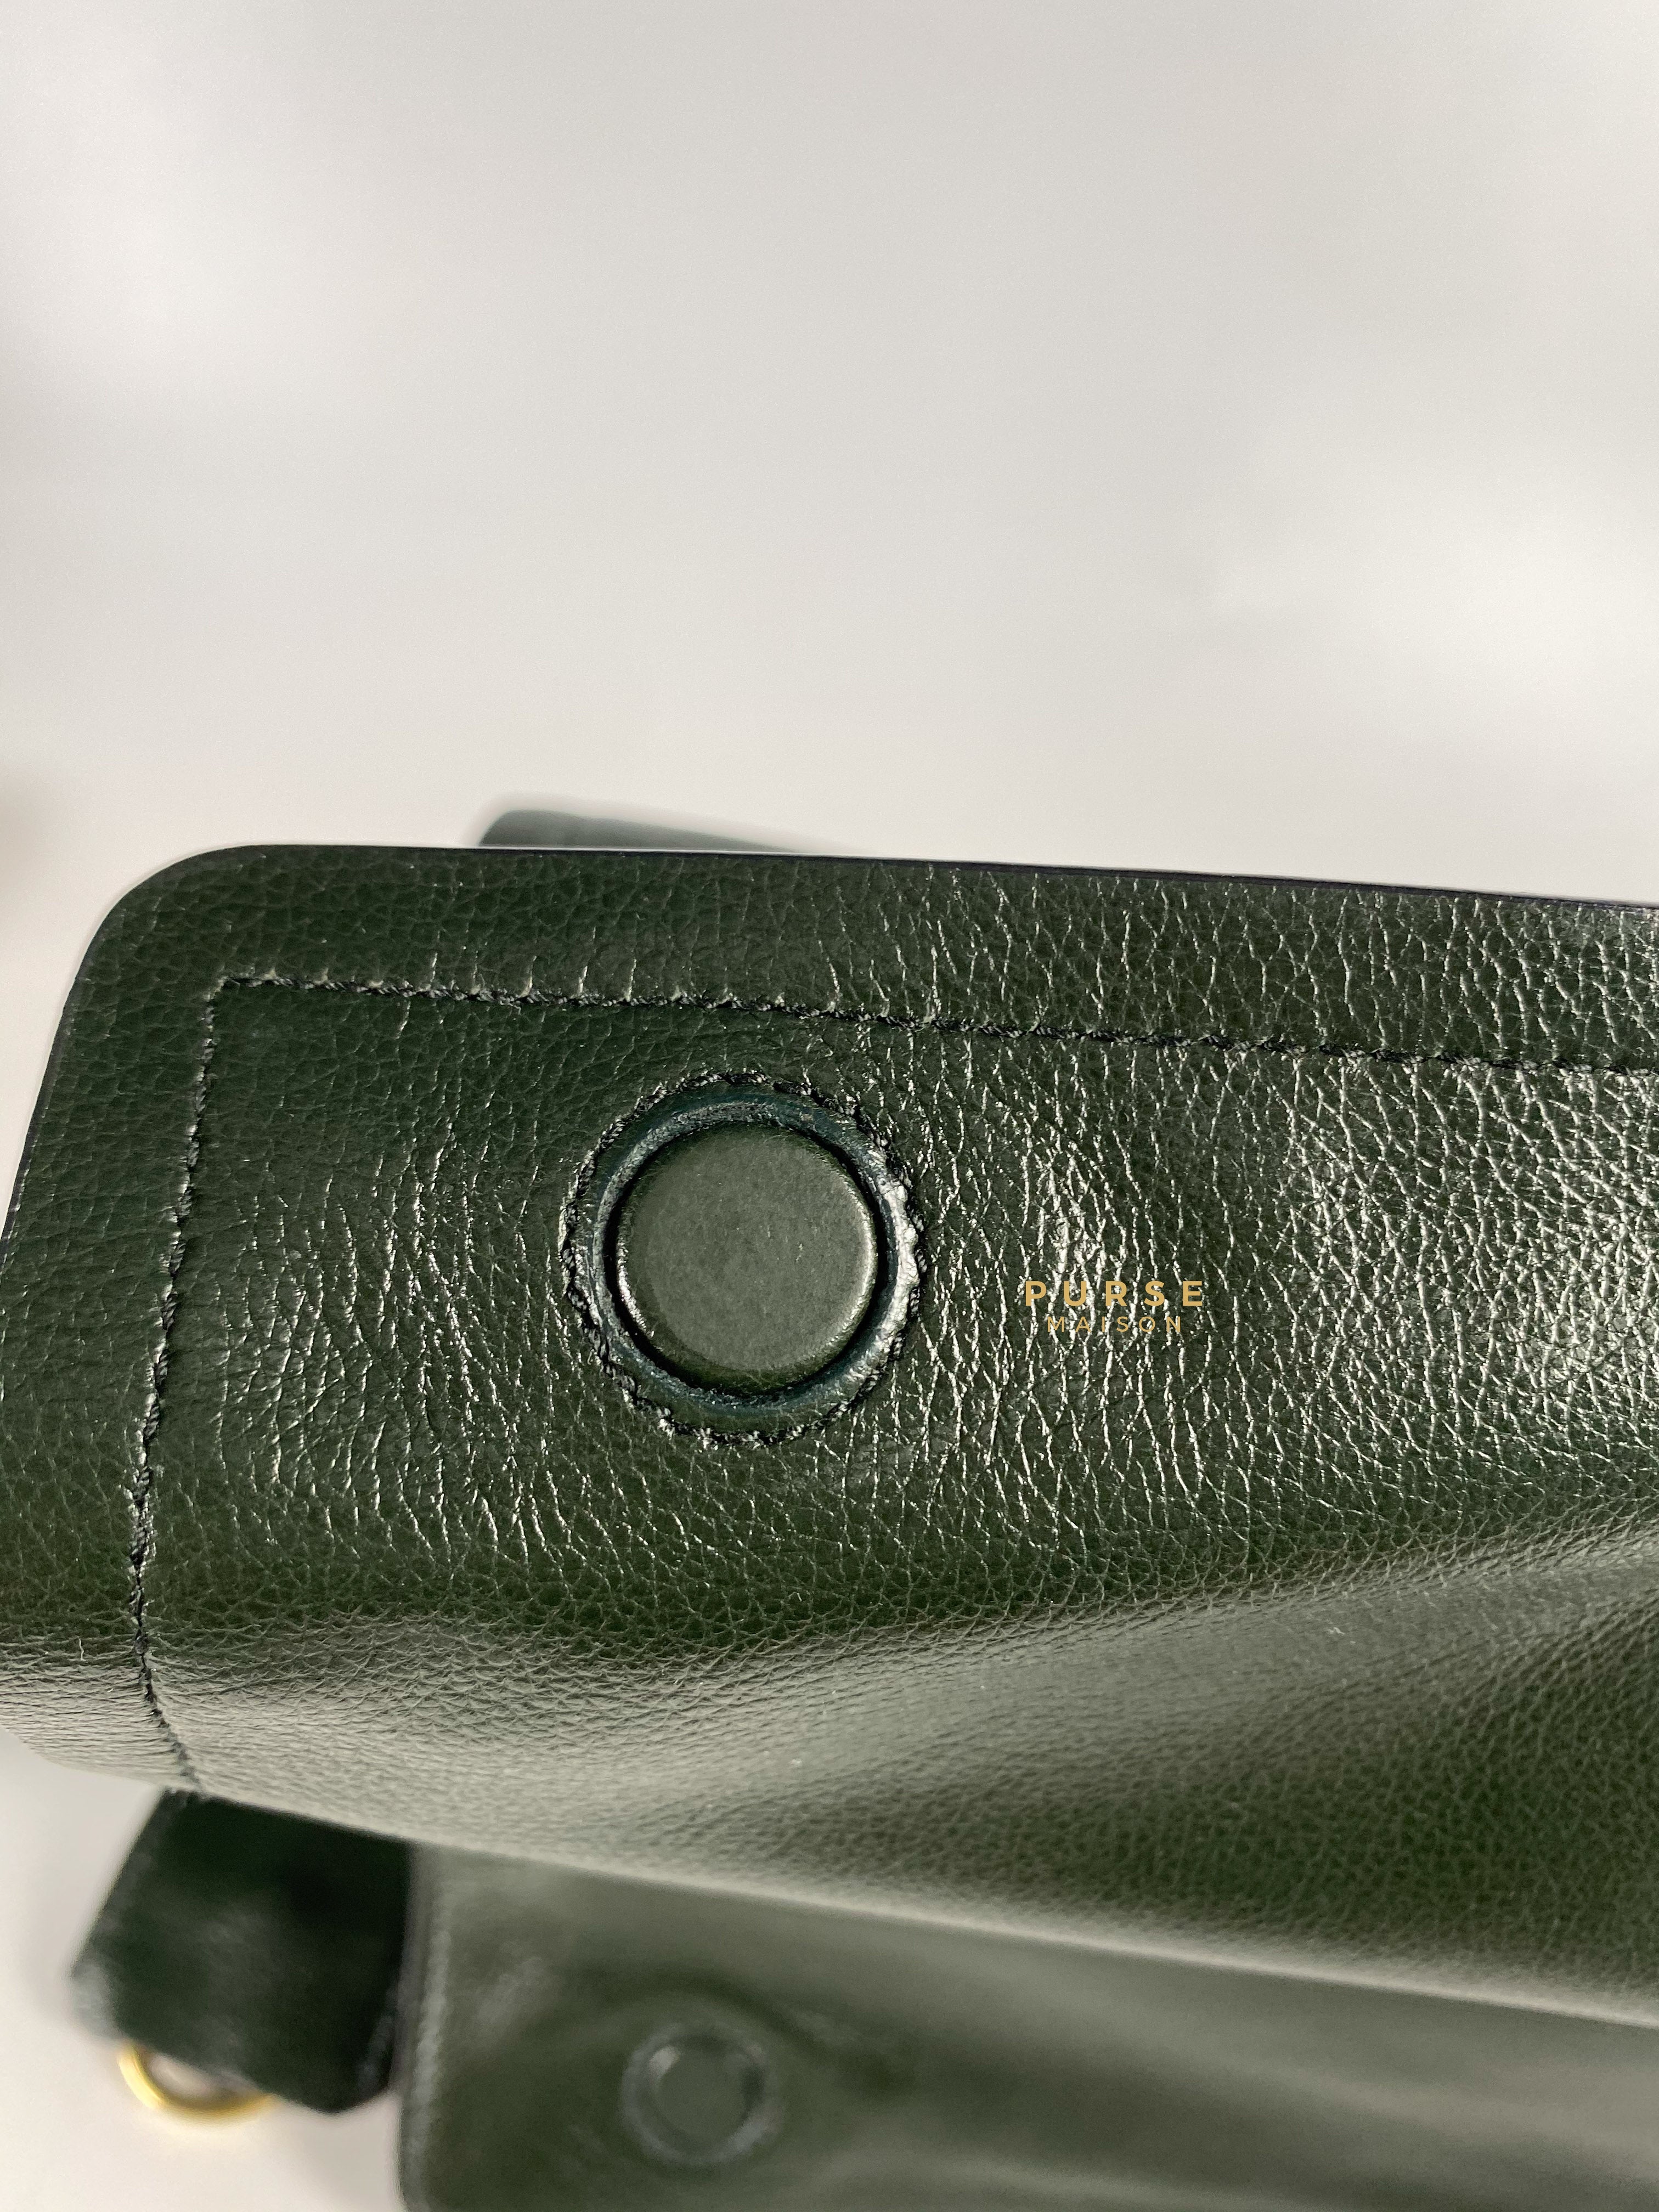 Prada 1BD085 Glace Calf Smeraldo (Emerald Green) Bag | Purse Maison Luxury Bags Shop